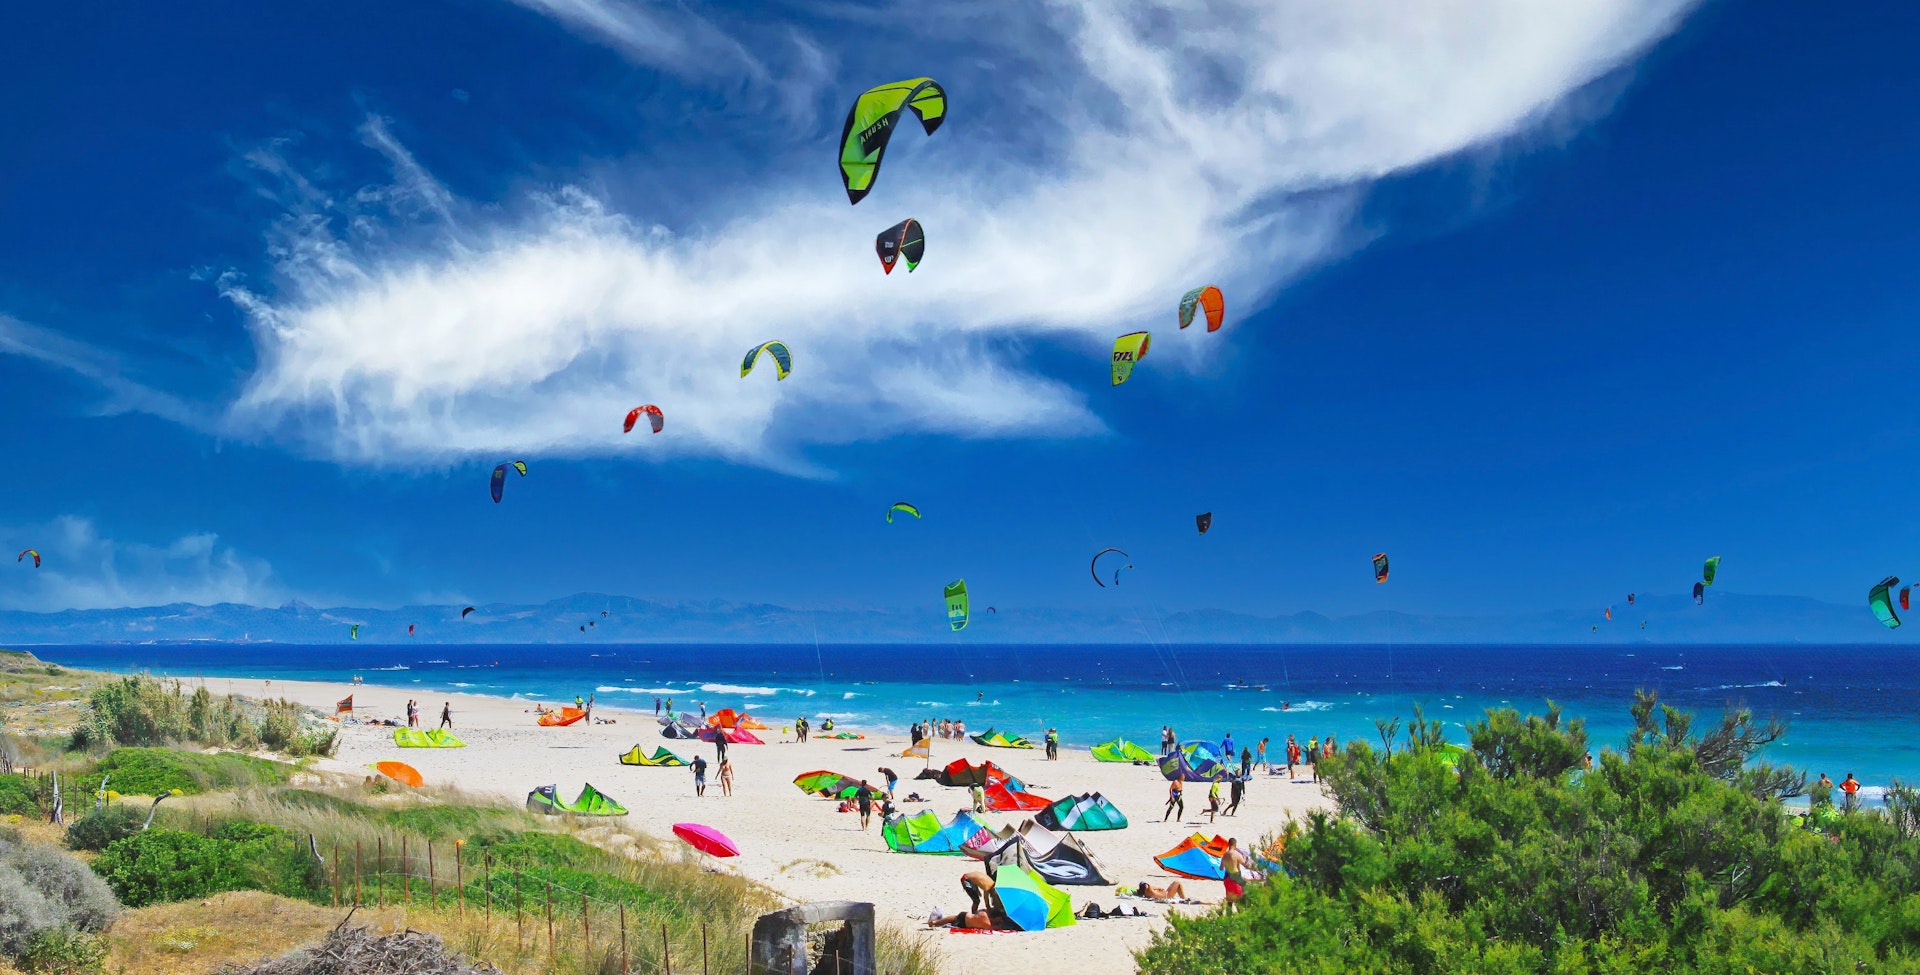 Kitesurfers and sunbathers on the beach at Tarifa, Costa de la Lus, Andalucía, Spain